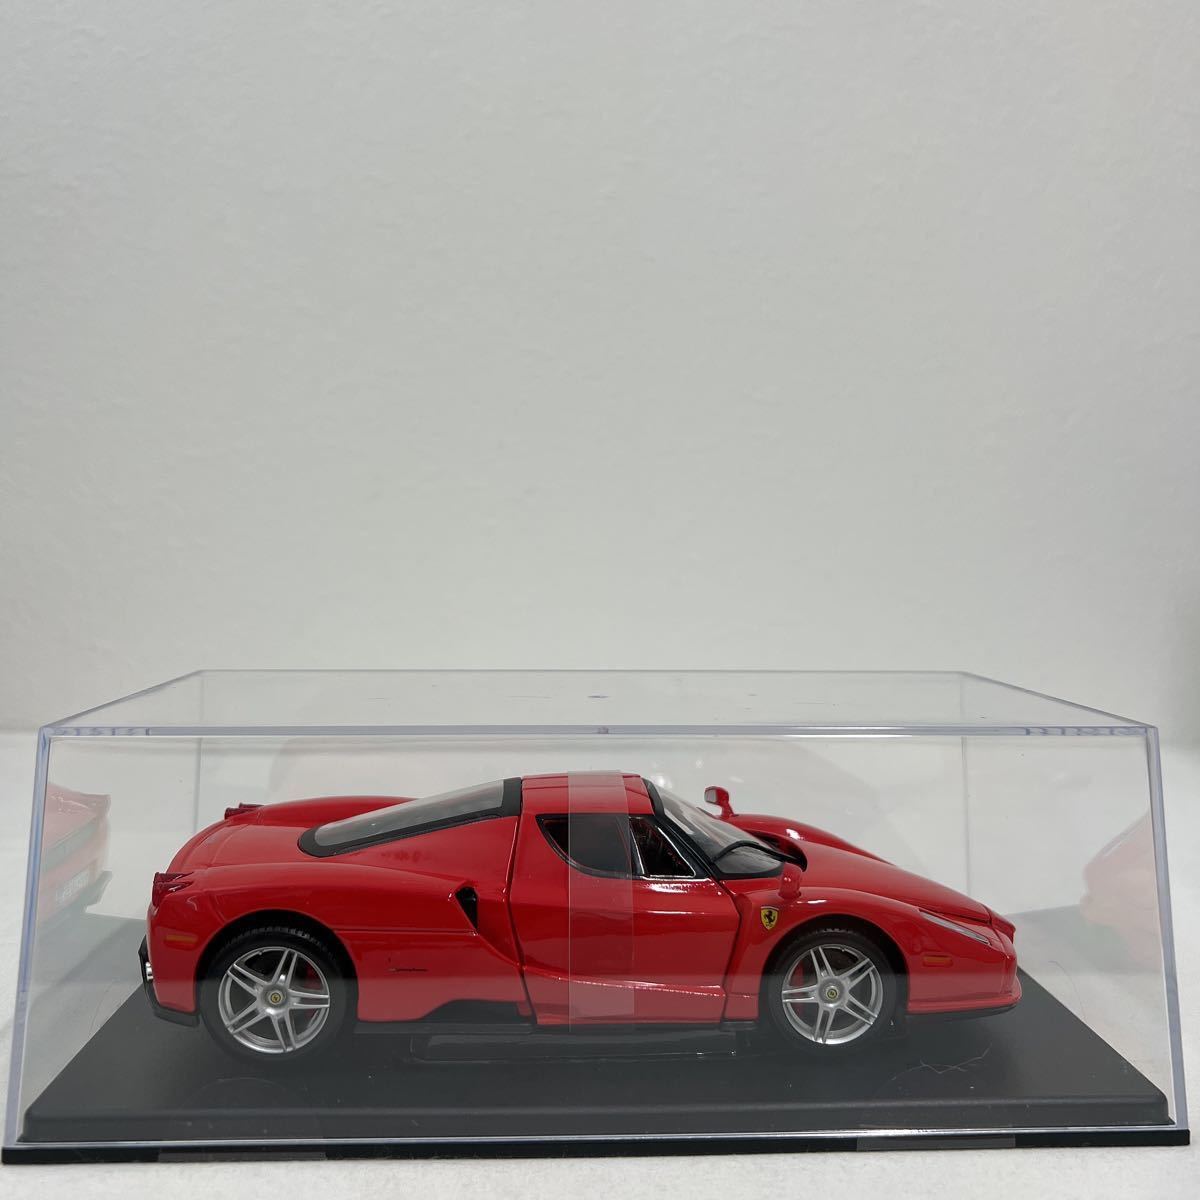  der Goss tea nire* grande .* Ferrari collection 1/24 ENZO FERRARI 2002 year Red Enzo Ferrari final product minicar model car 